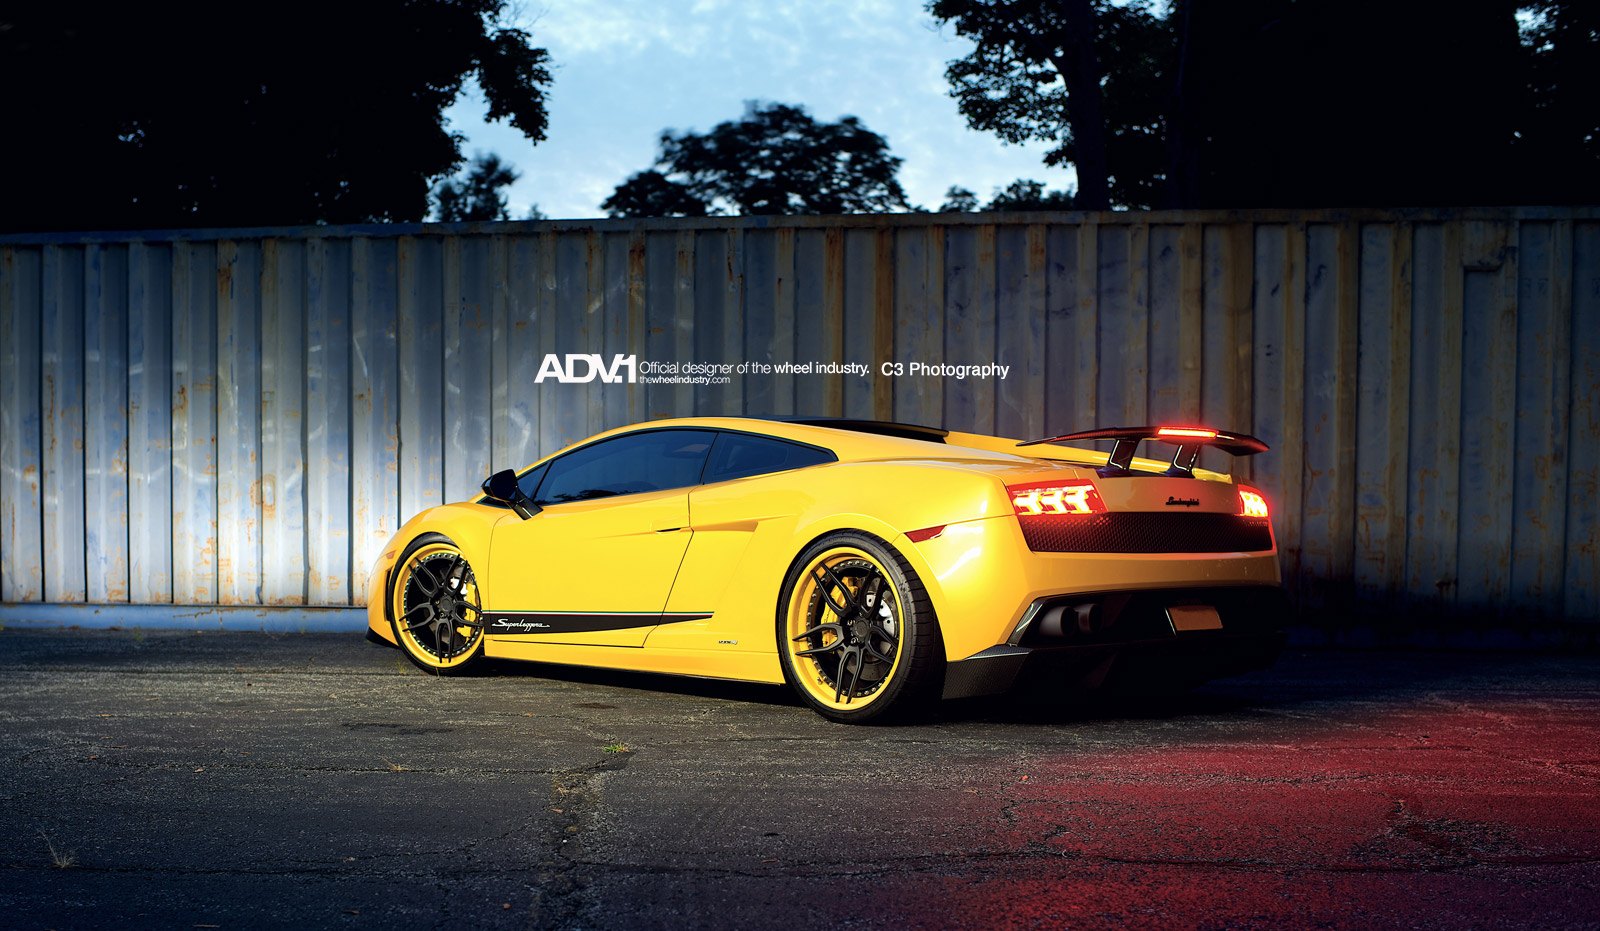 Wing Spoiler with Light on Yellow Lamborghini Gallardo - Photo by ADV.1